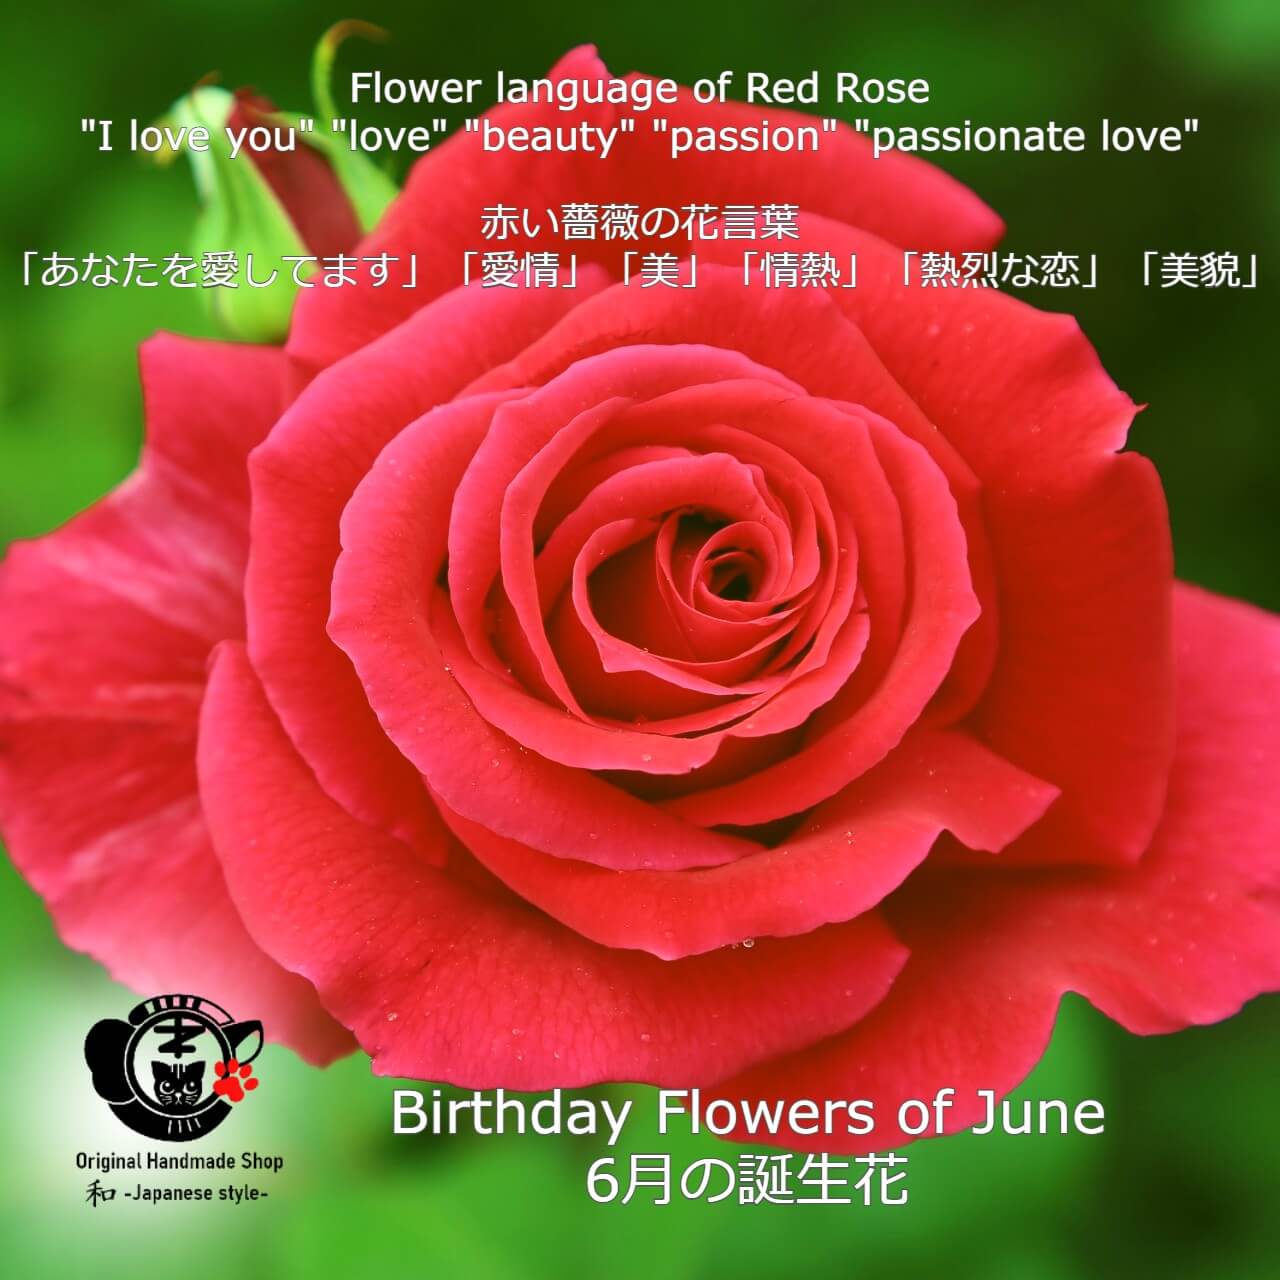 [Birthday Flower Of June][Choice of birthstones] Rose And Birthstone Earrings【6月誕生花】【選べる誕生石】薔薇と誕生石のピアス